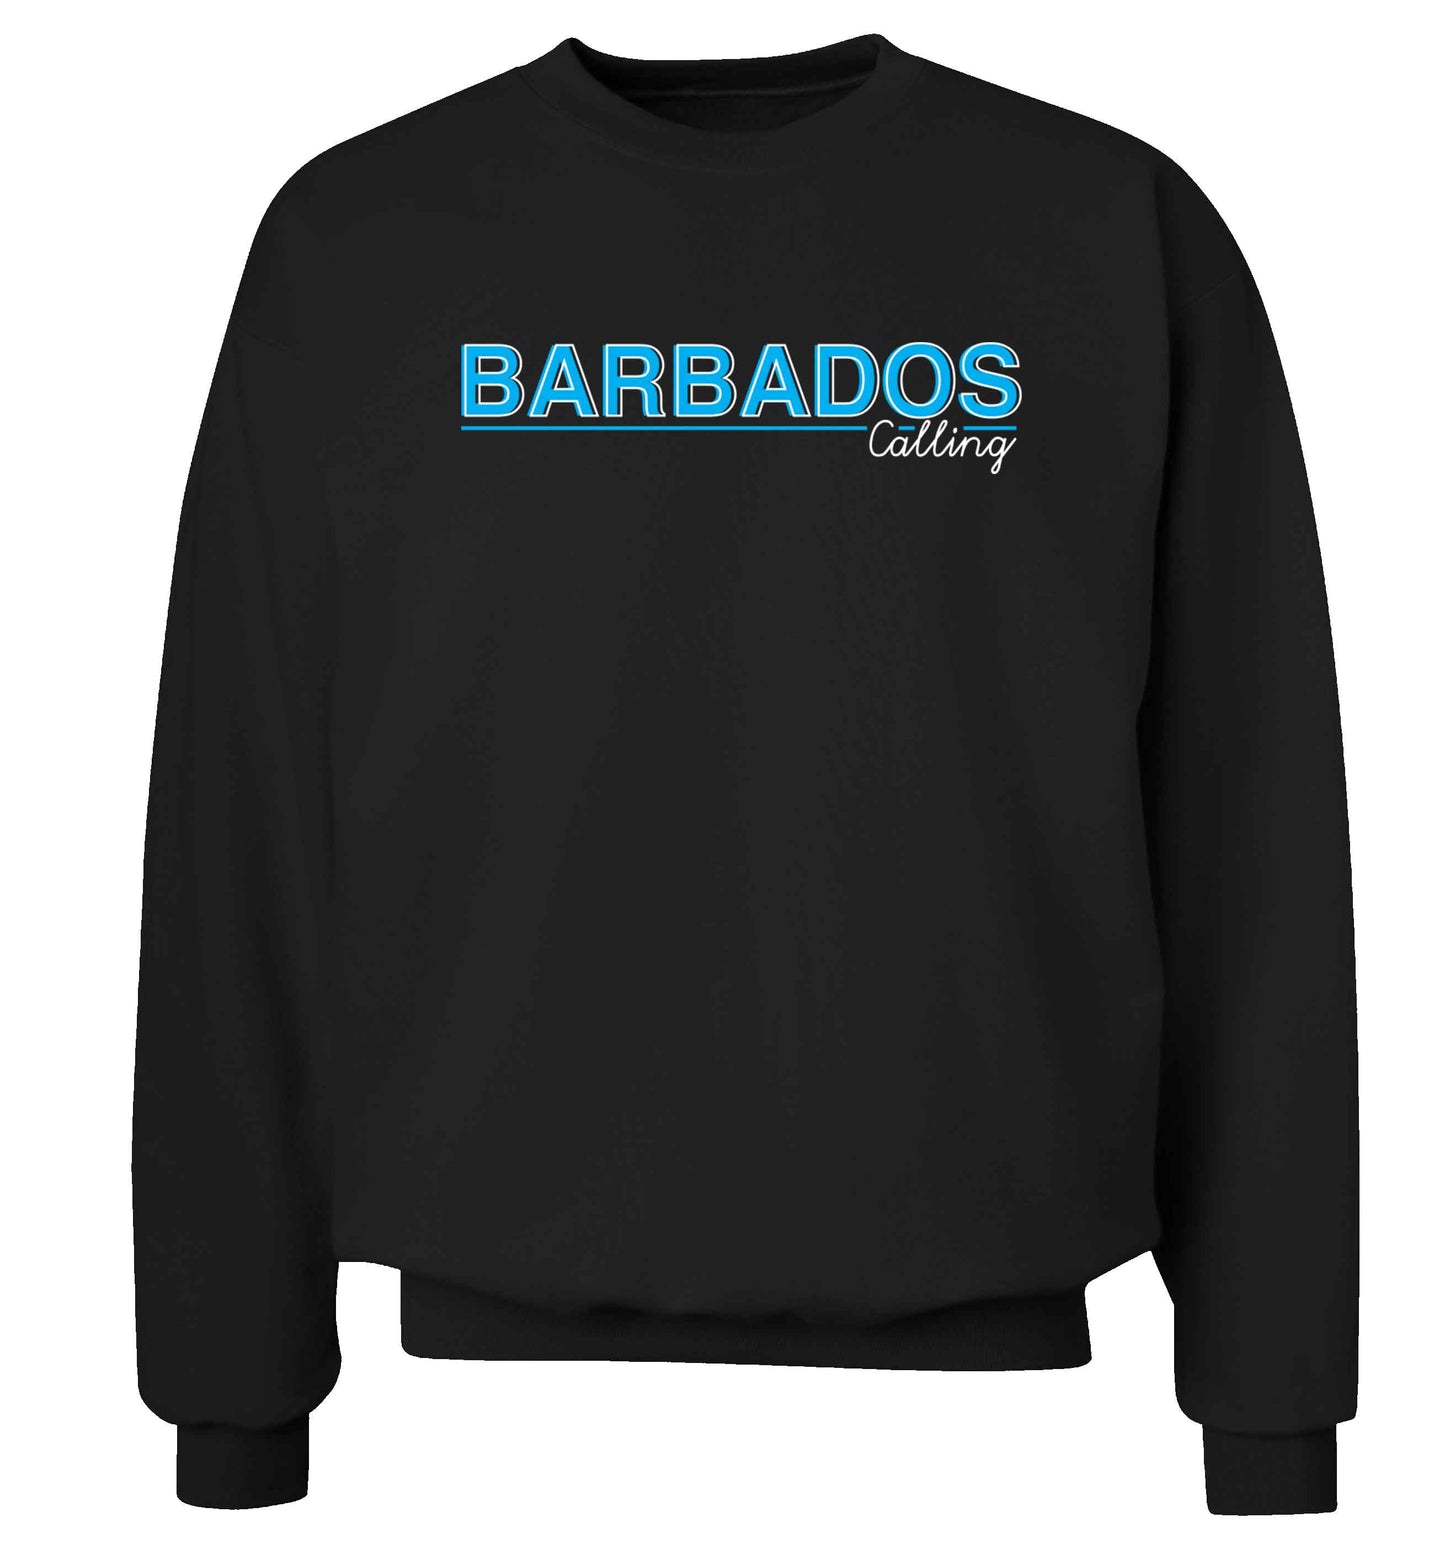 Barbados calling Adult's unisex black Sweater 2XL